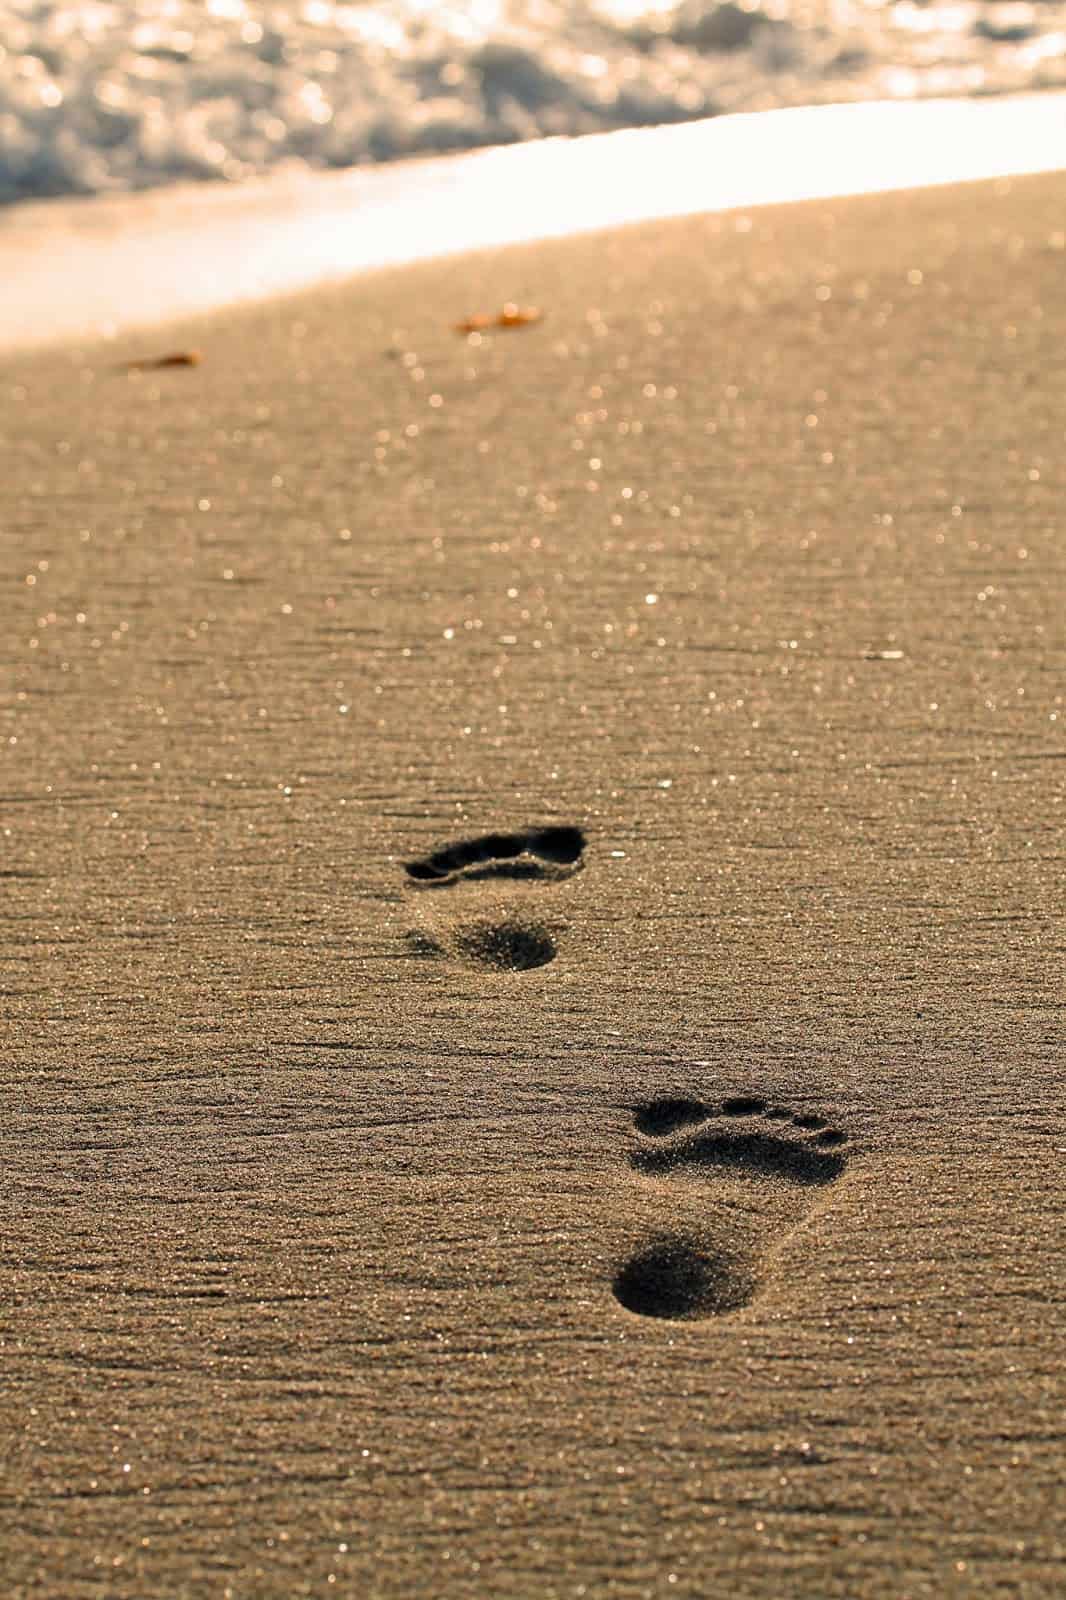 footprints in sand on a beach